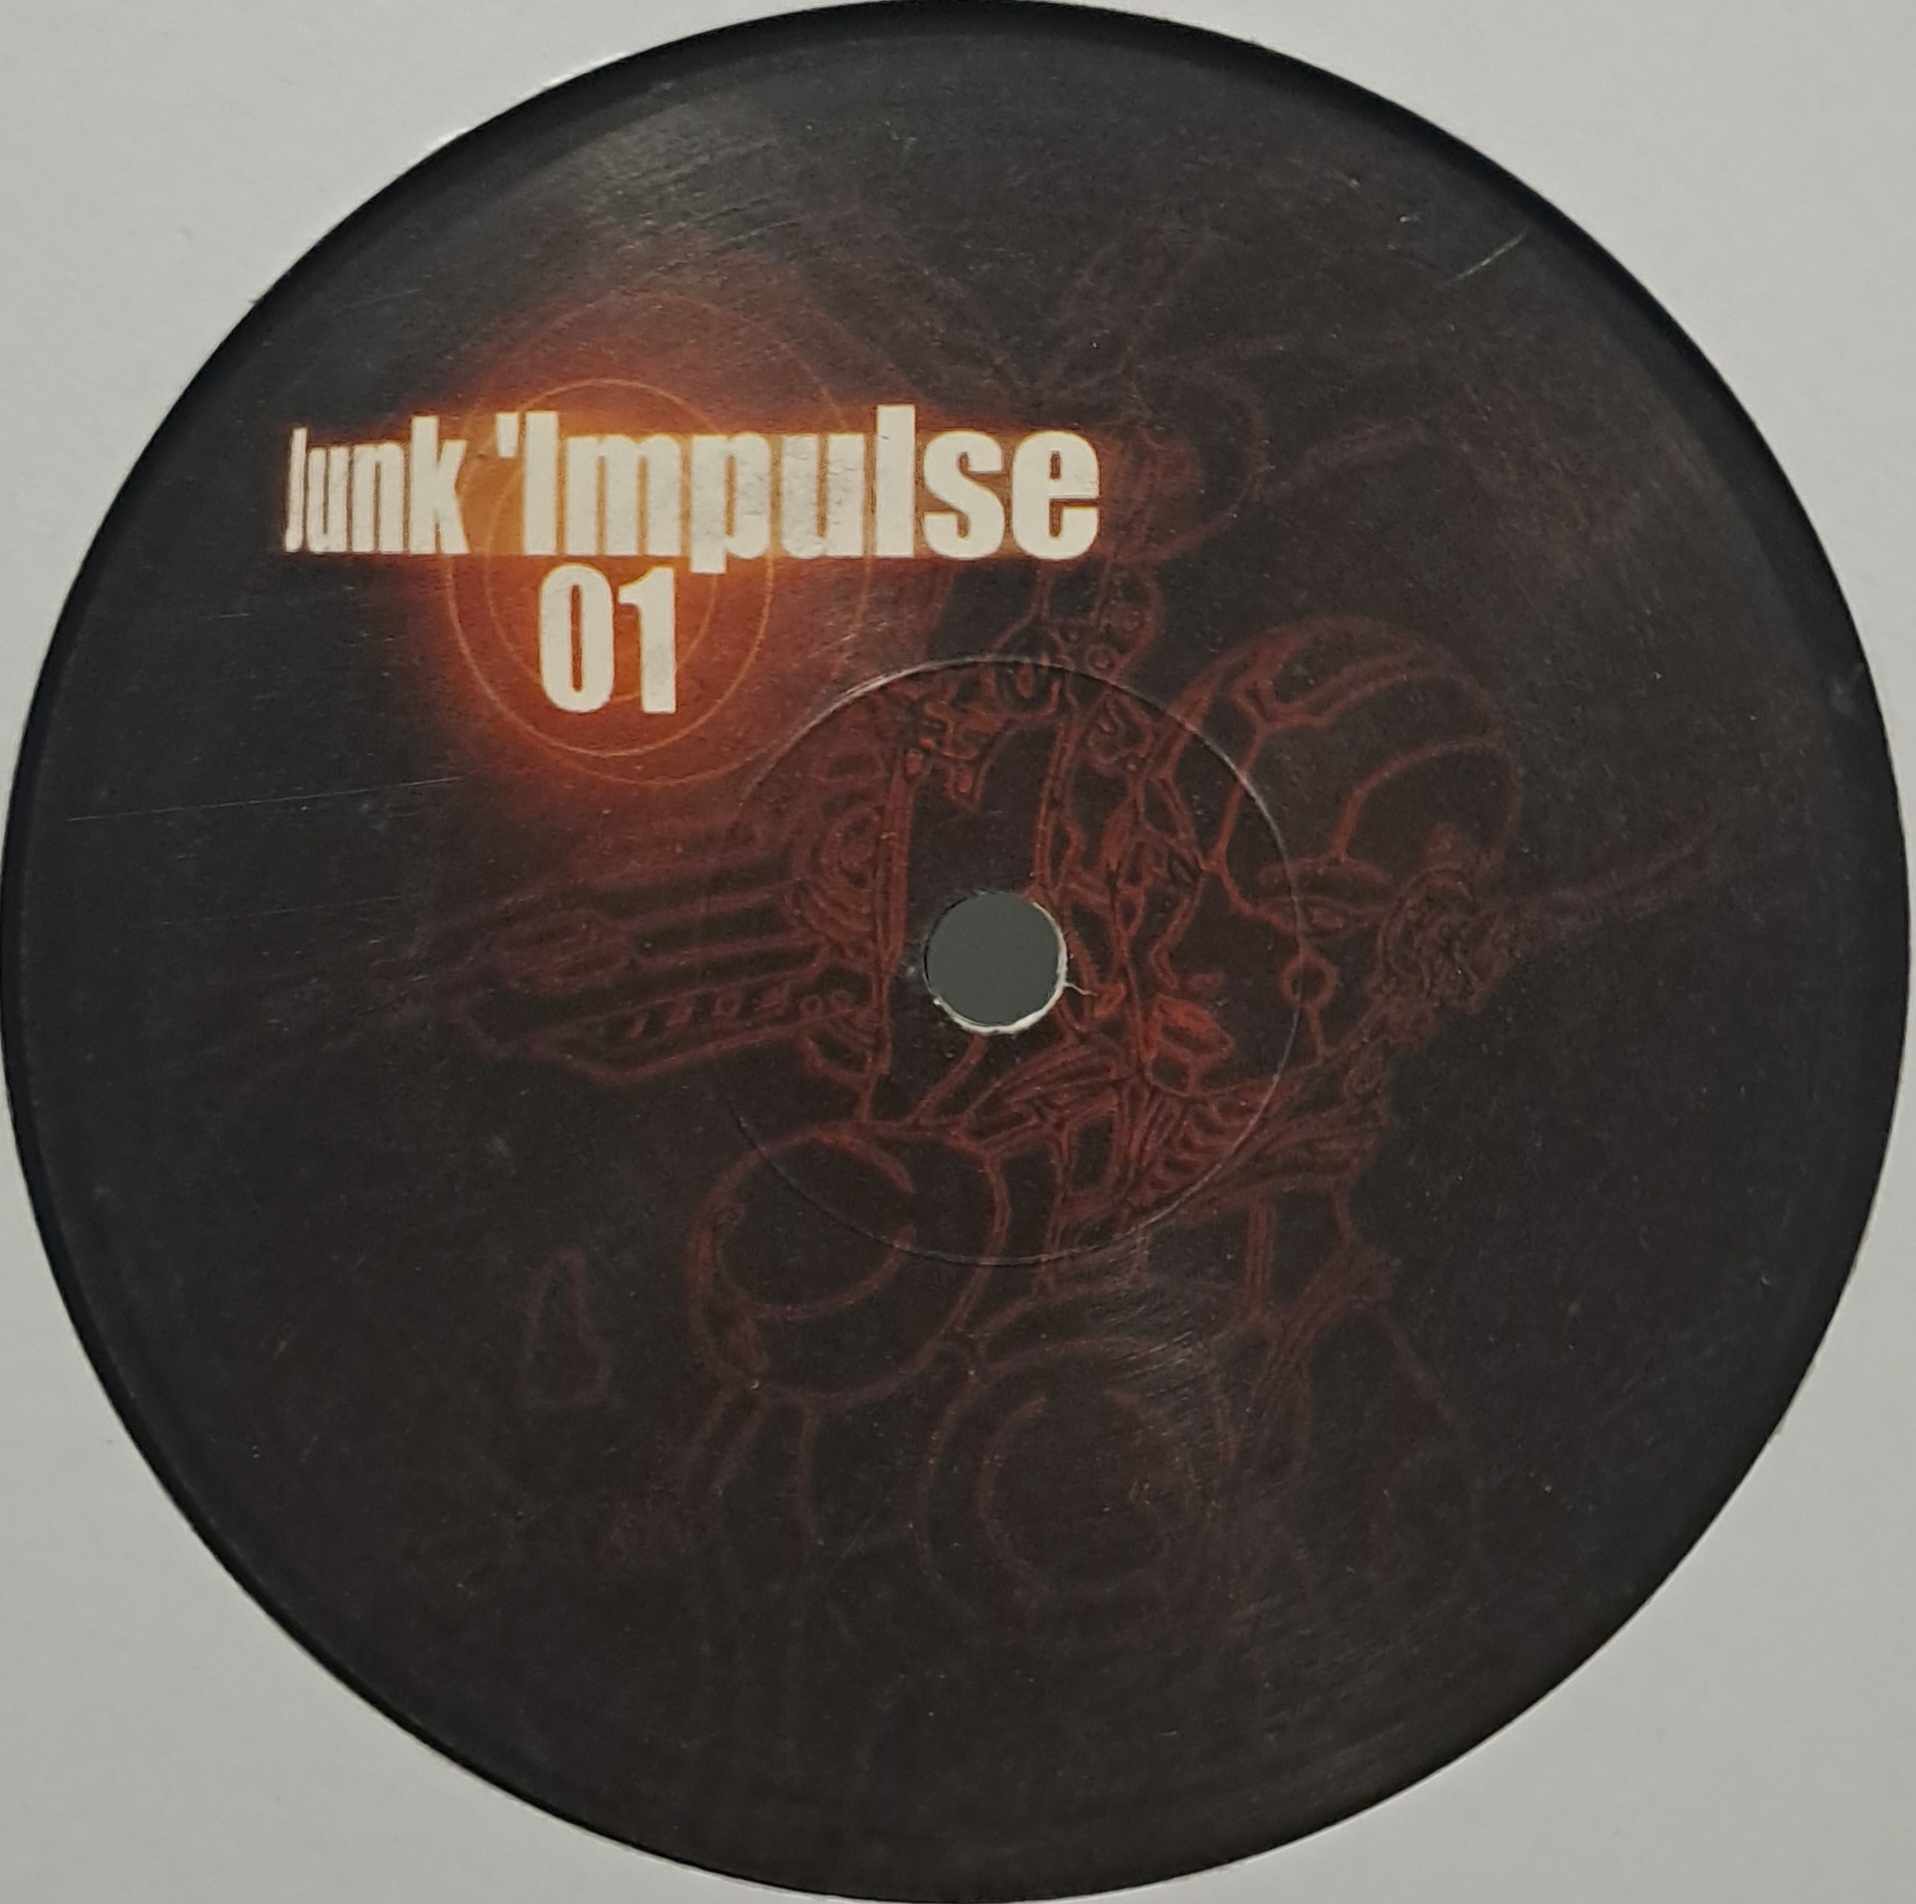 Junk Impulse 01 - vinyle freetekno